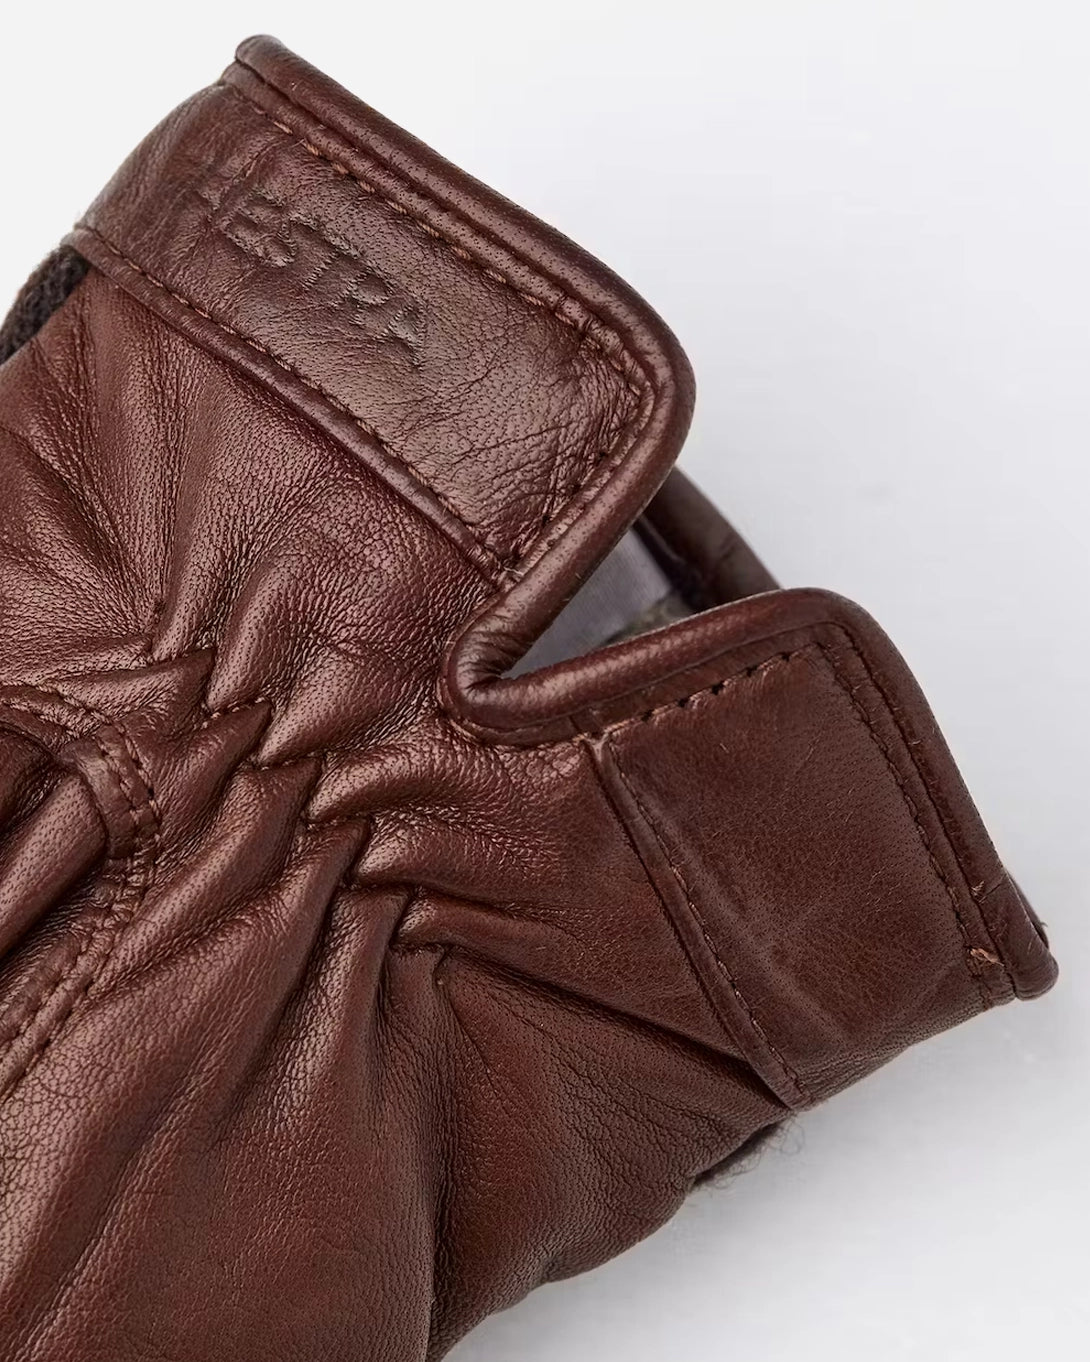 Espresso/Chestnut Saga Hestra Fashion Winter Gloves